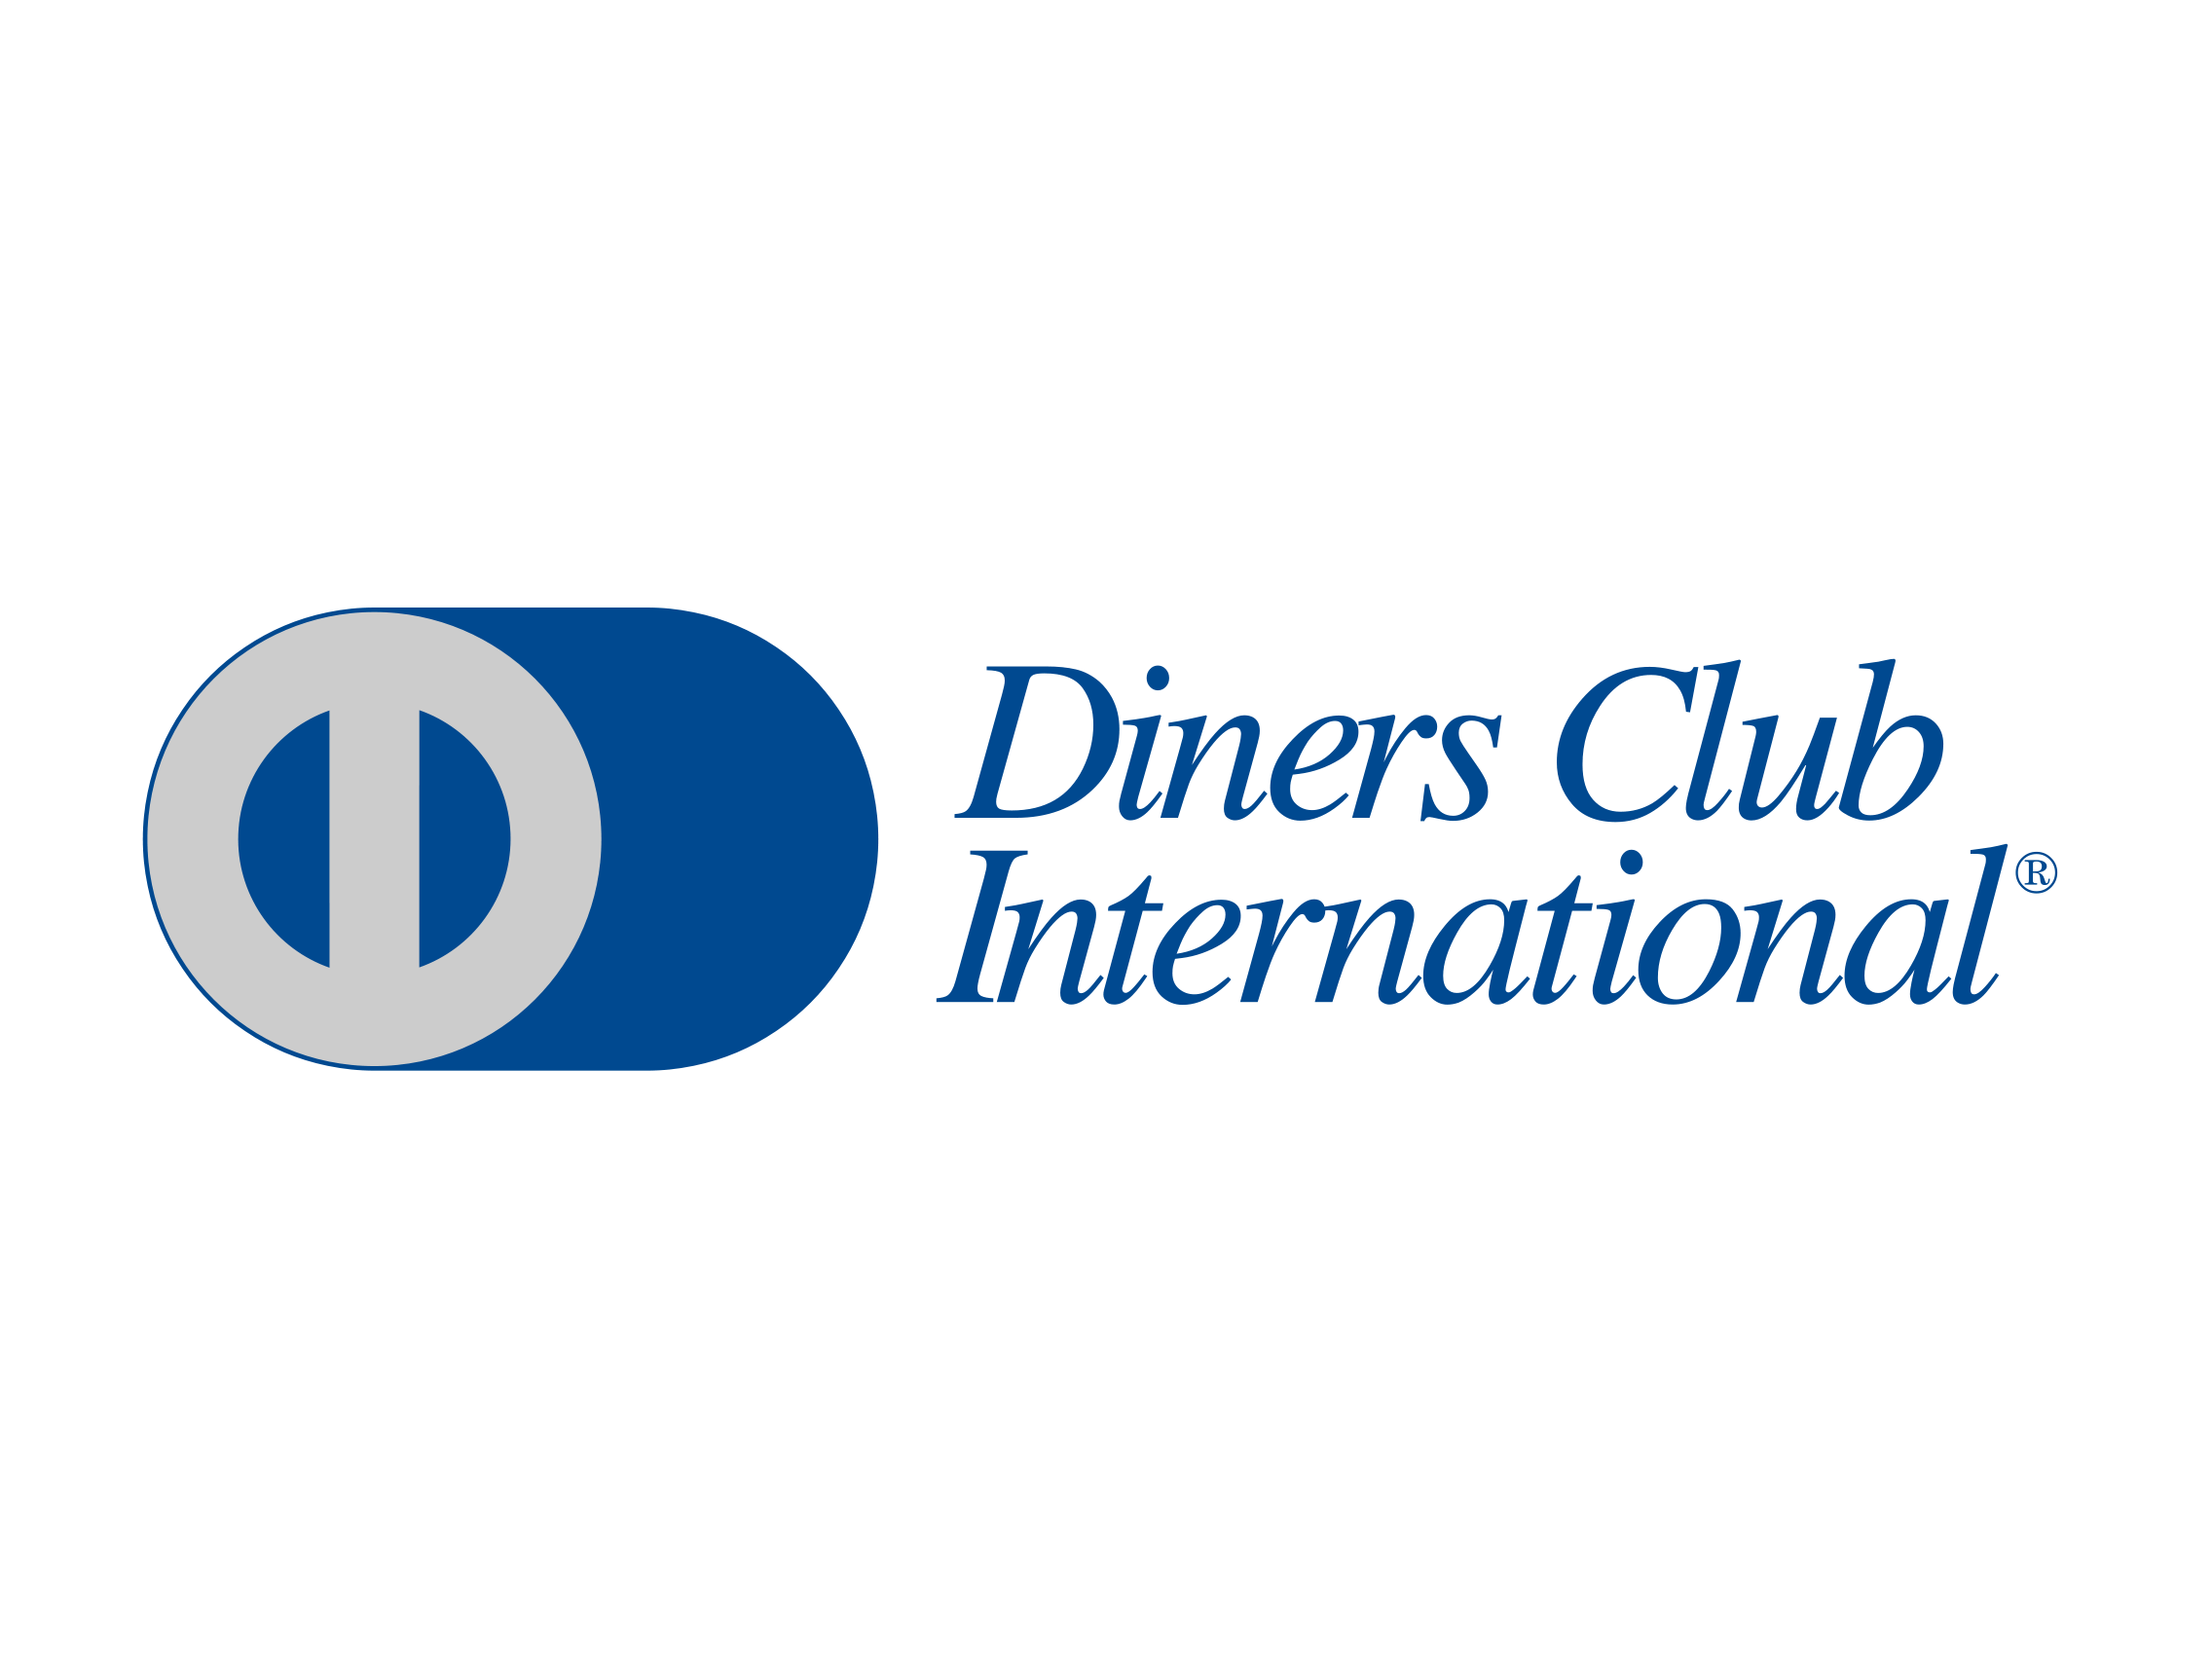 Diners club. Diners Club International карты. Diners Club логотип. Карта Diners Club 1950.